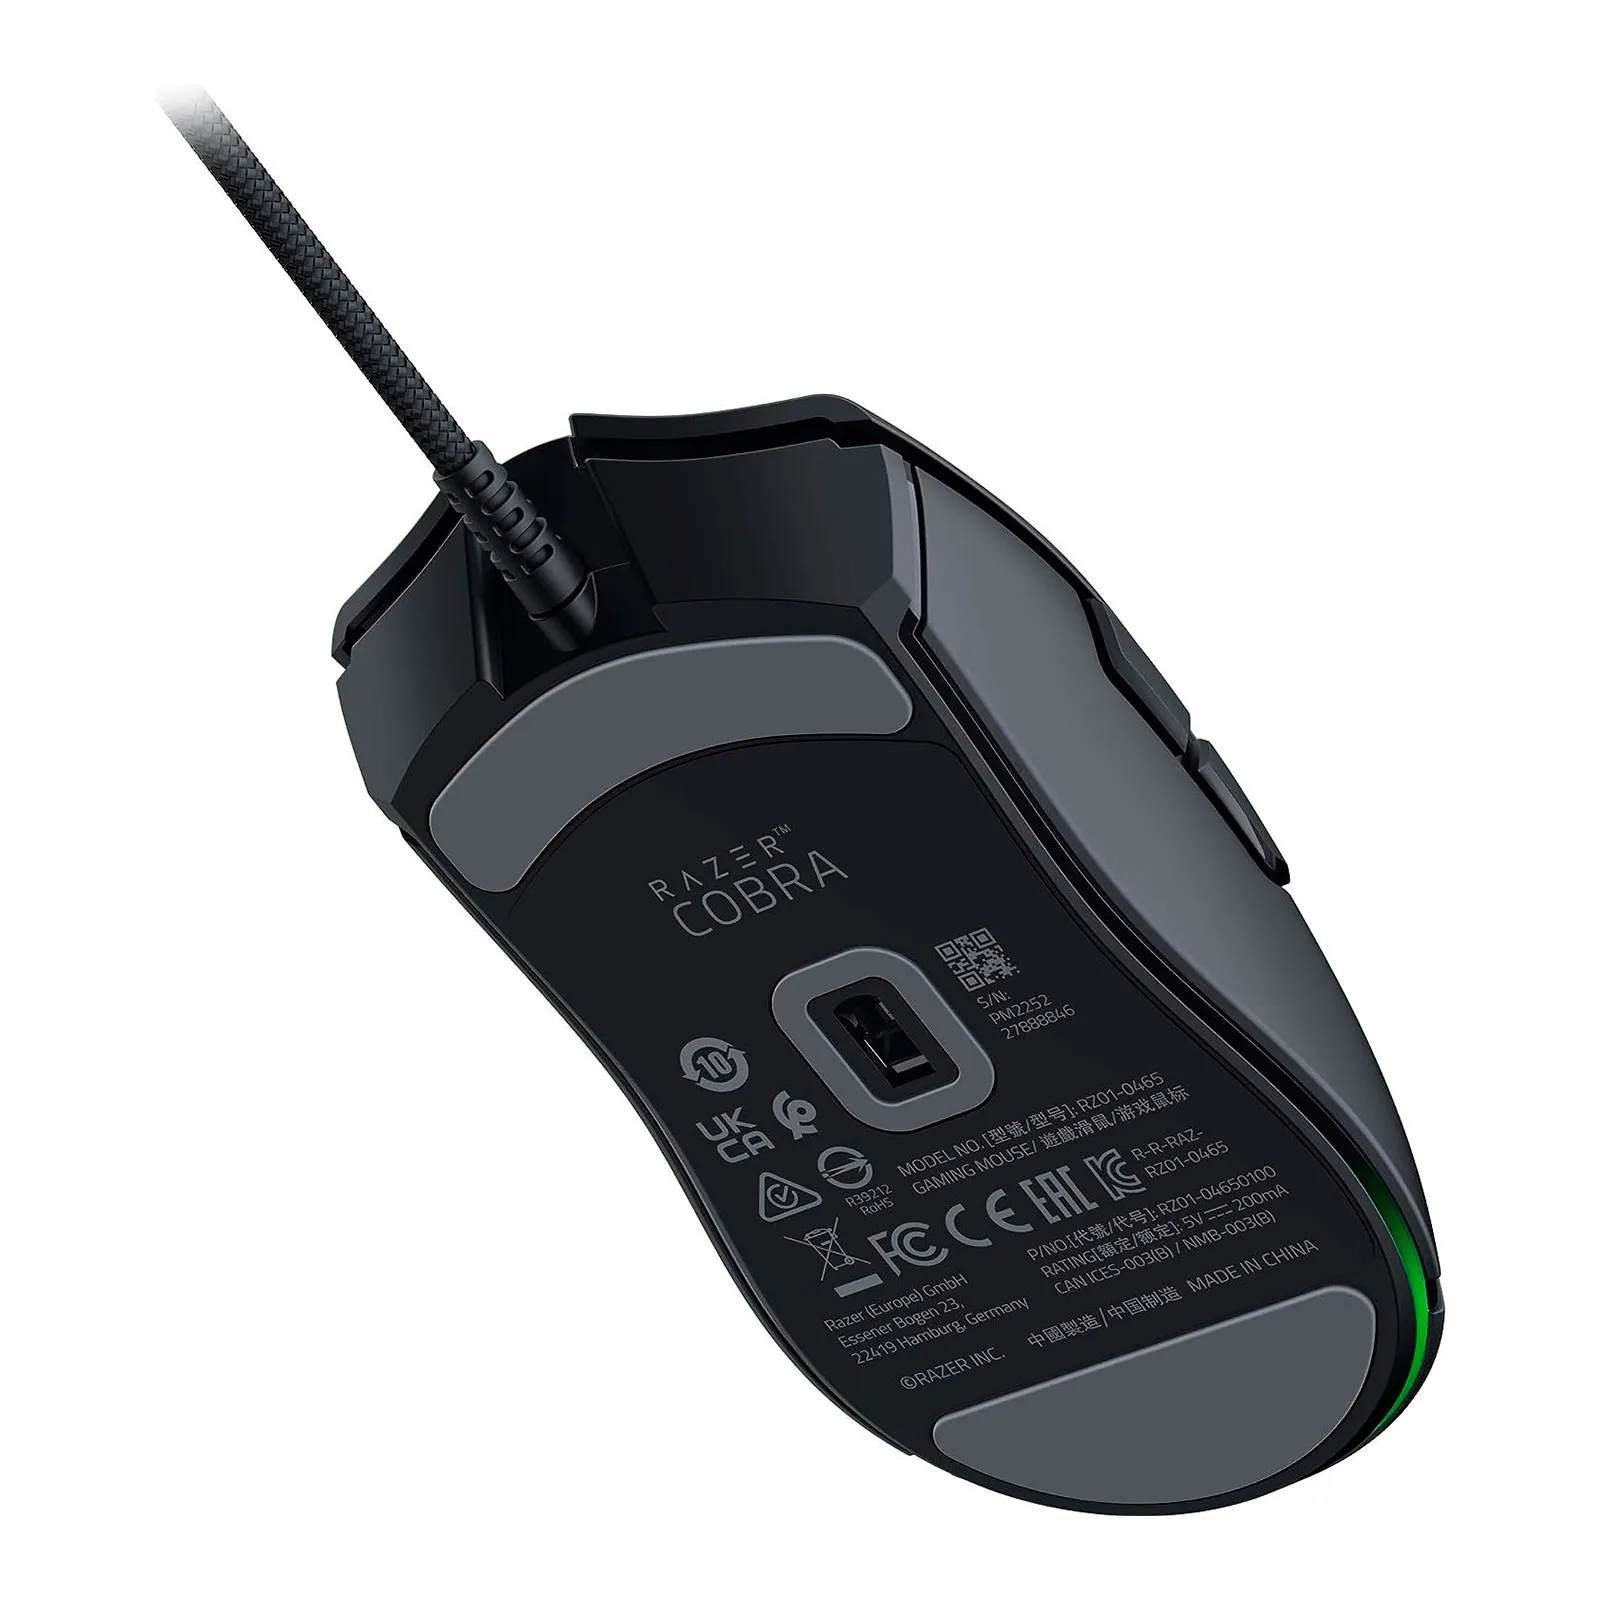 Mouse Gamer Razer Cobra Lightweight Wired